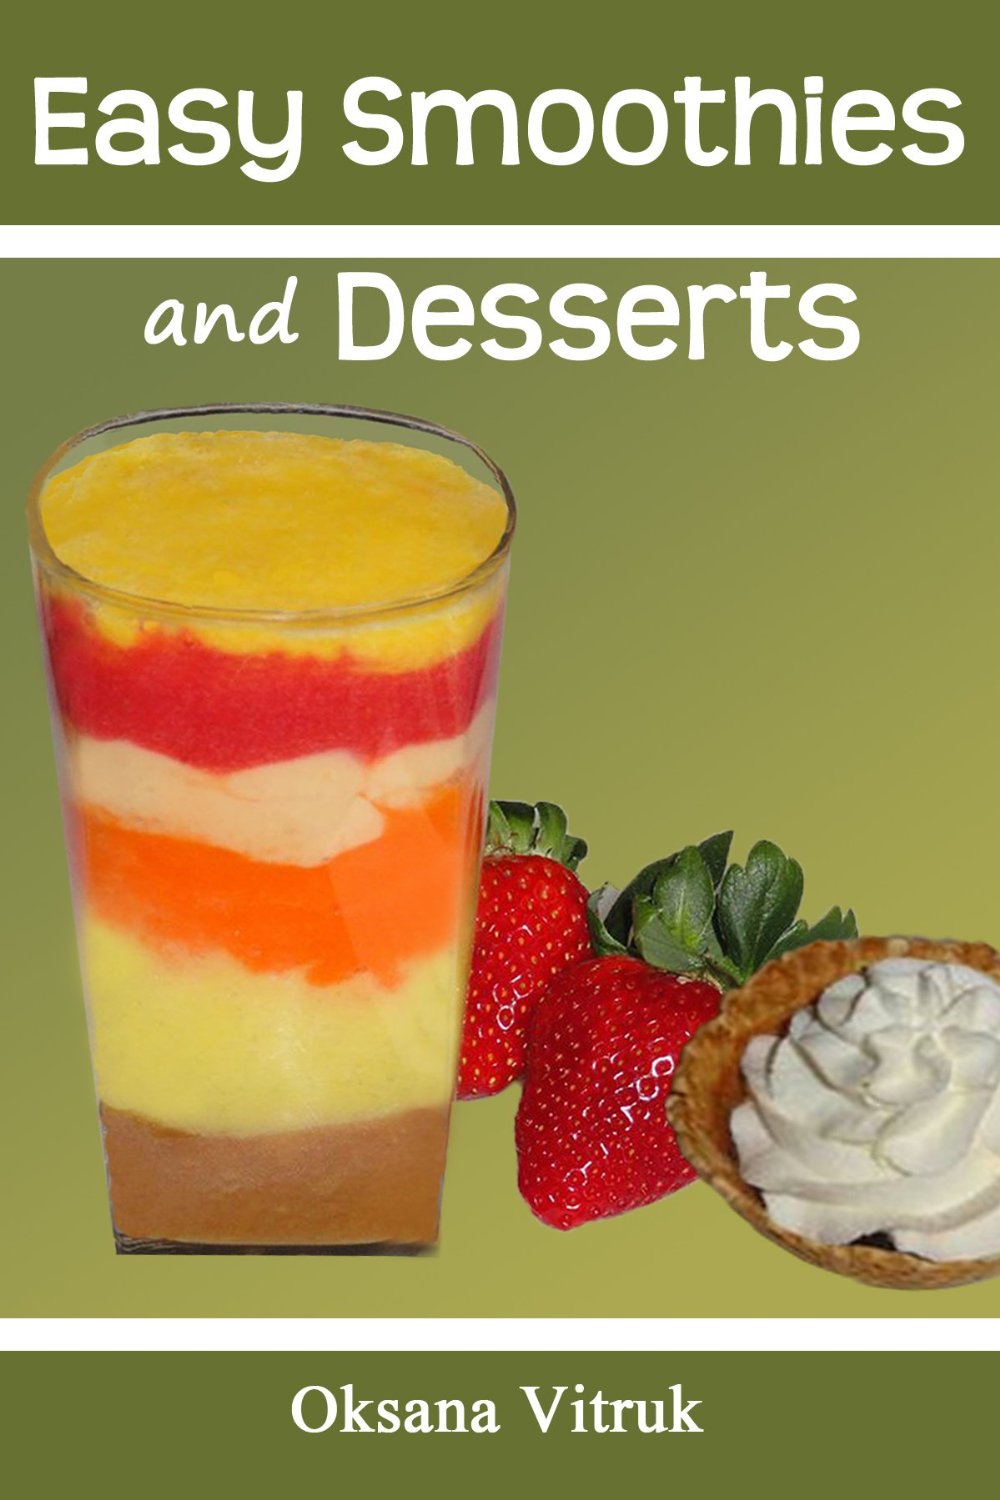 Easy Smoothies and Desserts by Oksana Vitruk